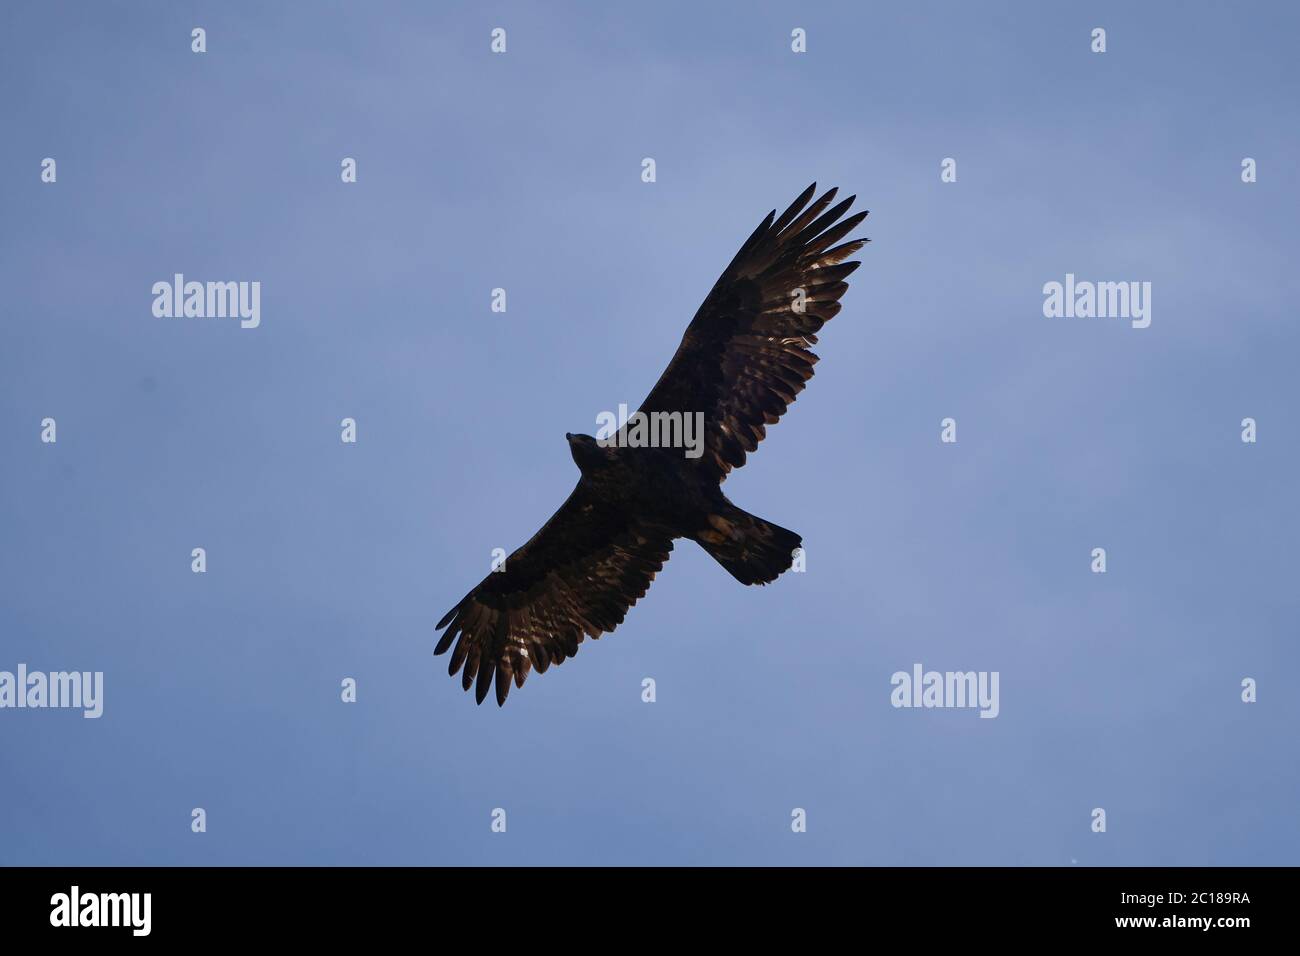 Goldener Adler Alpen Schweiz Aquila chrysaetos Greifvögel Accipitridae  Stockfotografie - Alamy